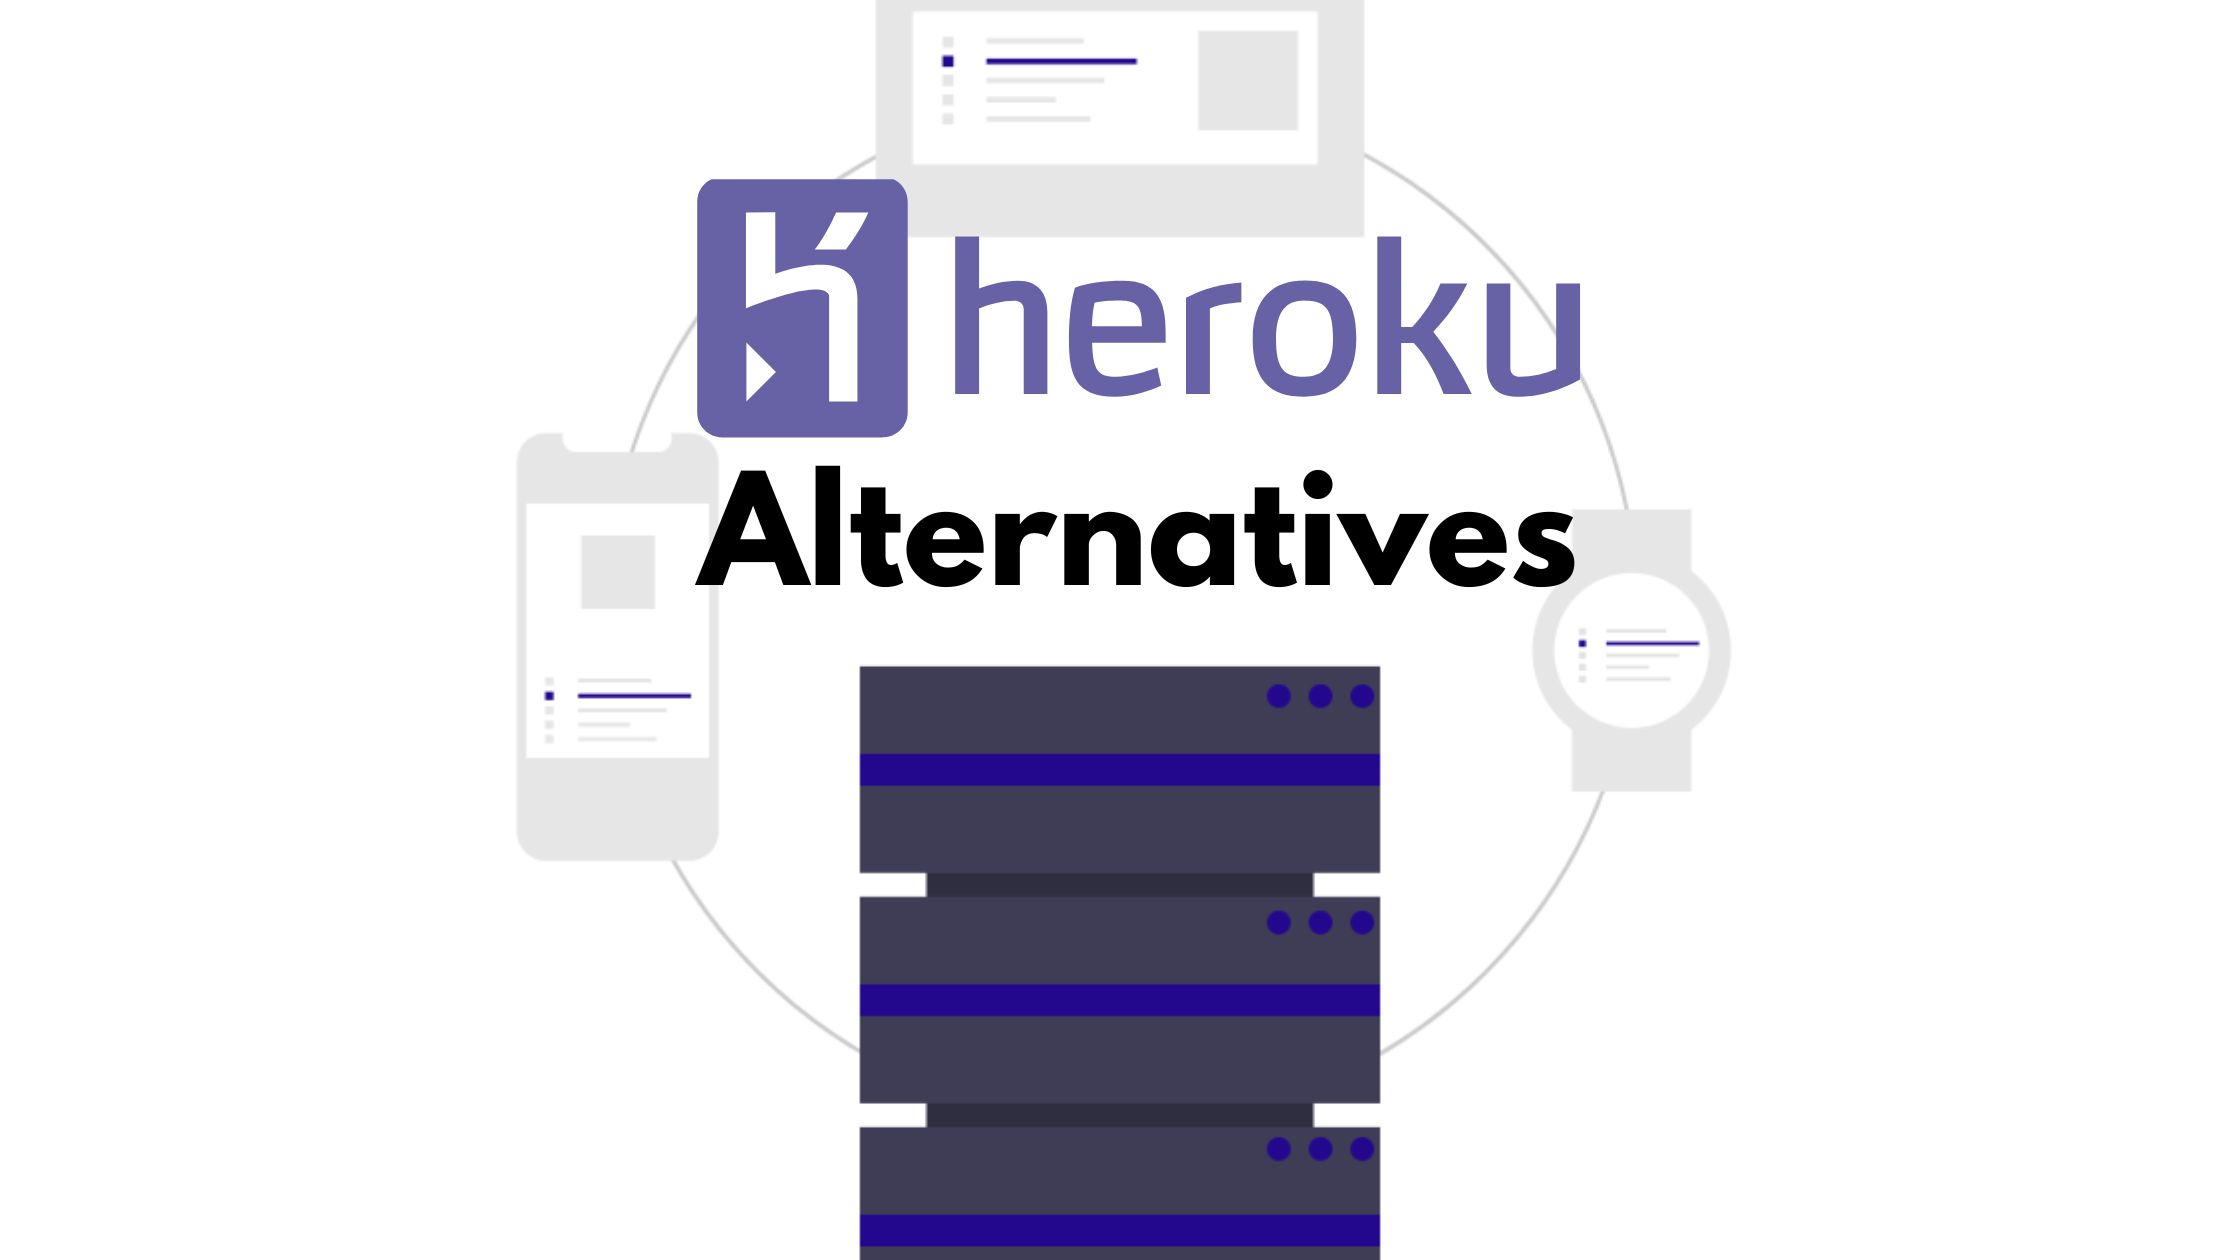 Heroku Alternatives